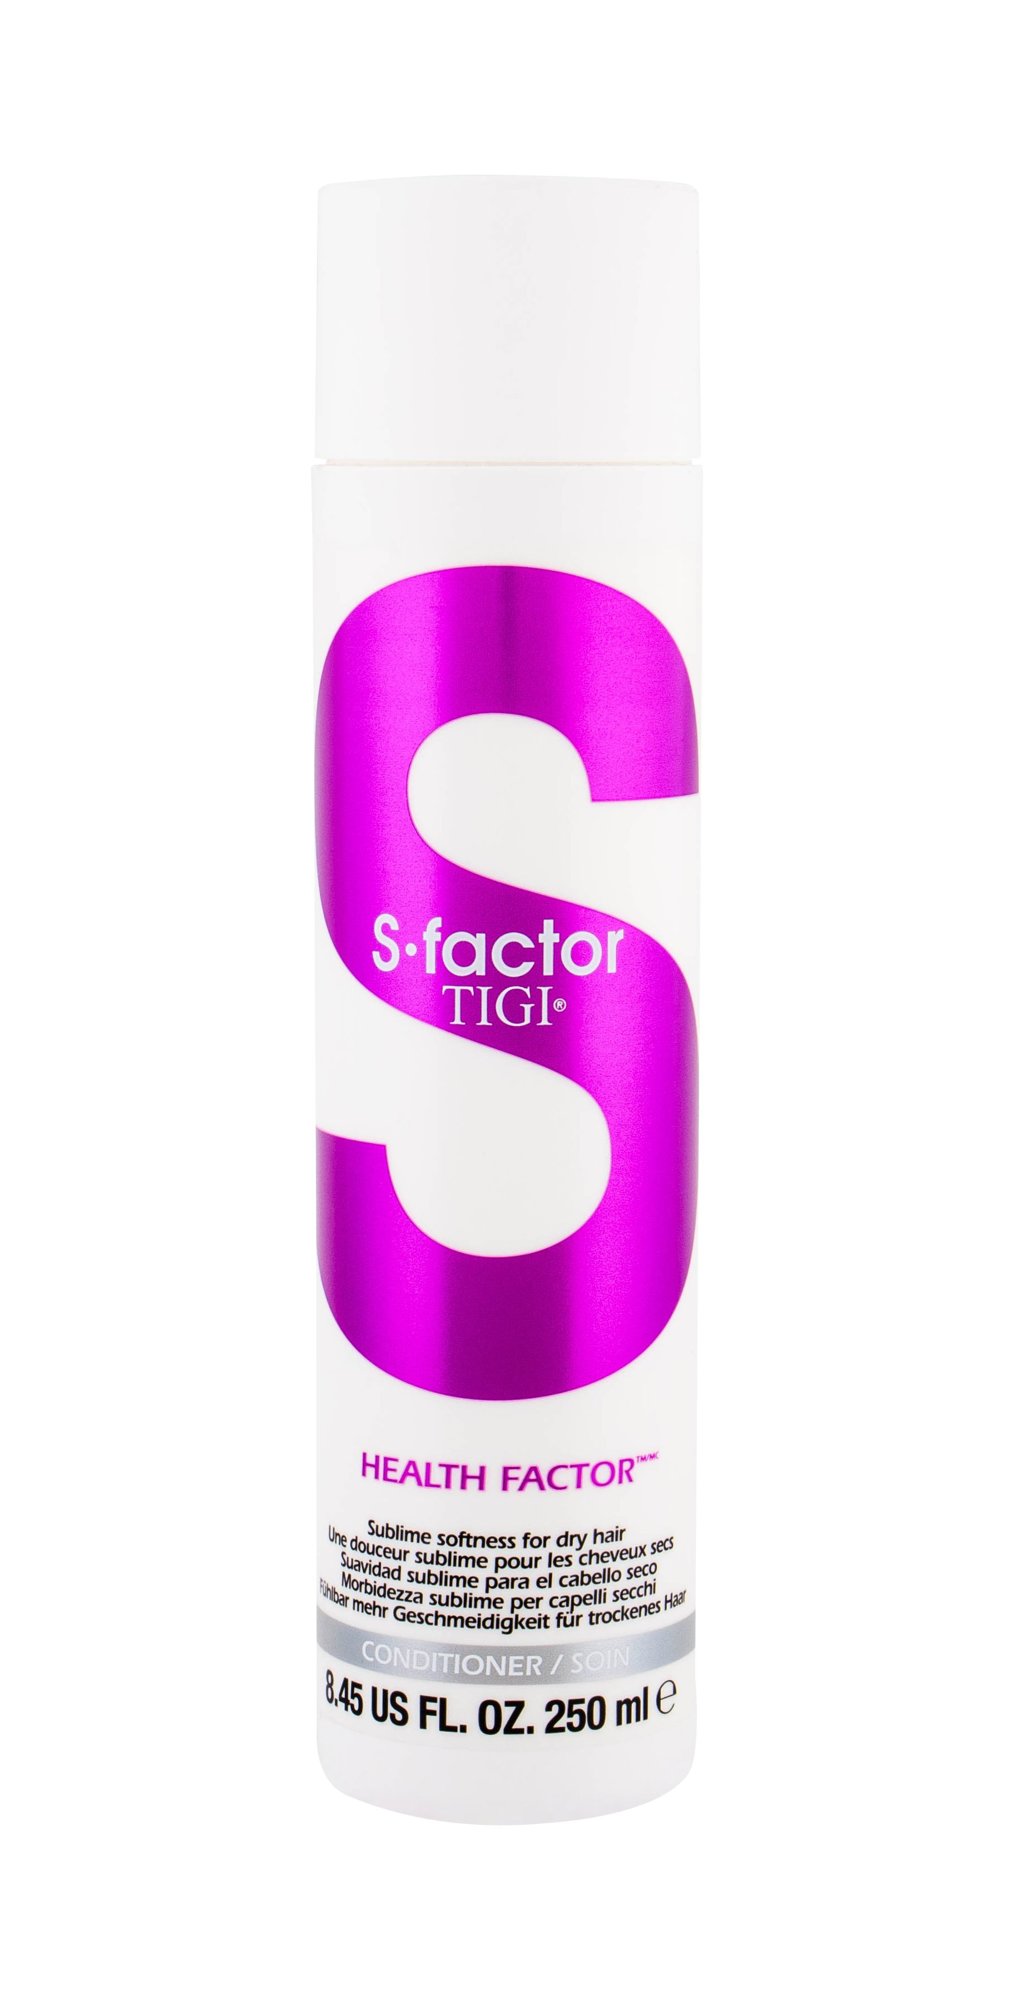 Tigi S Factor Health Factor kondicionierius